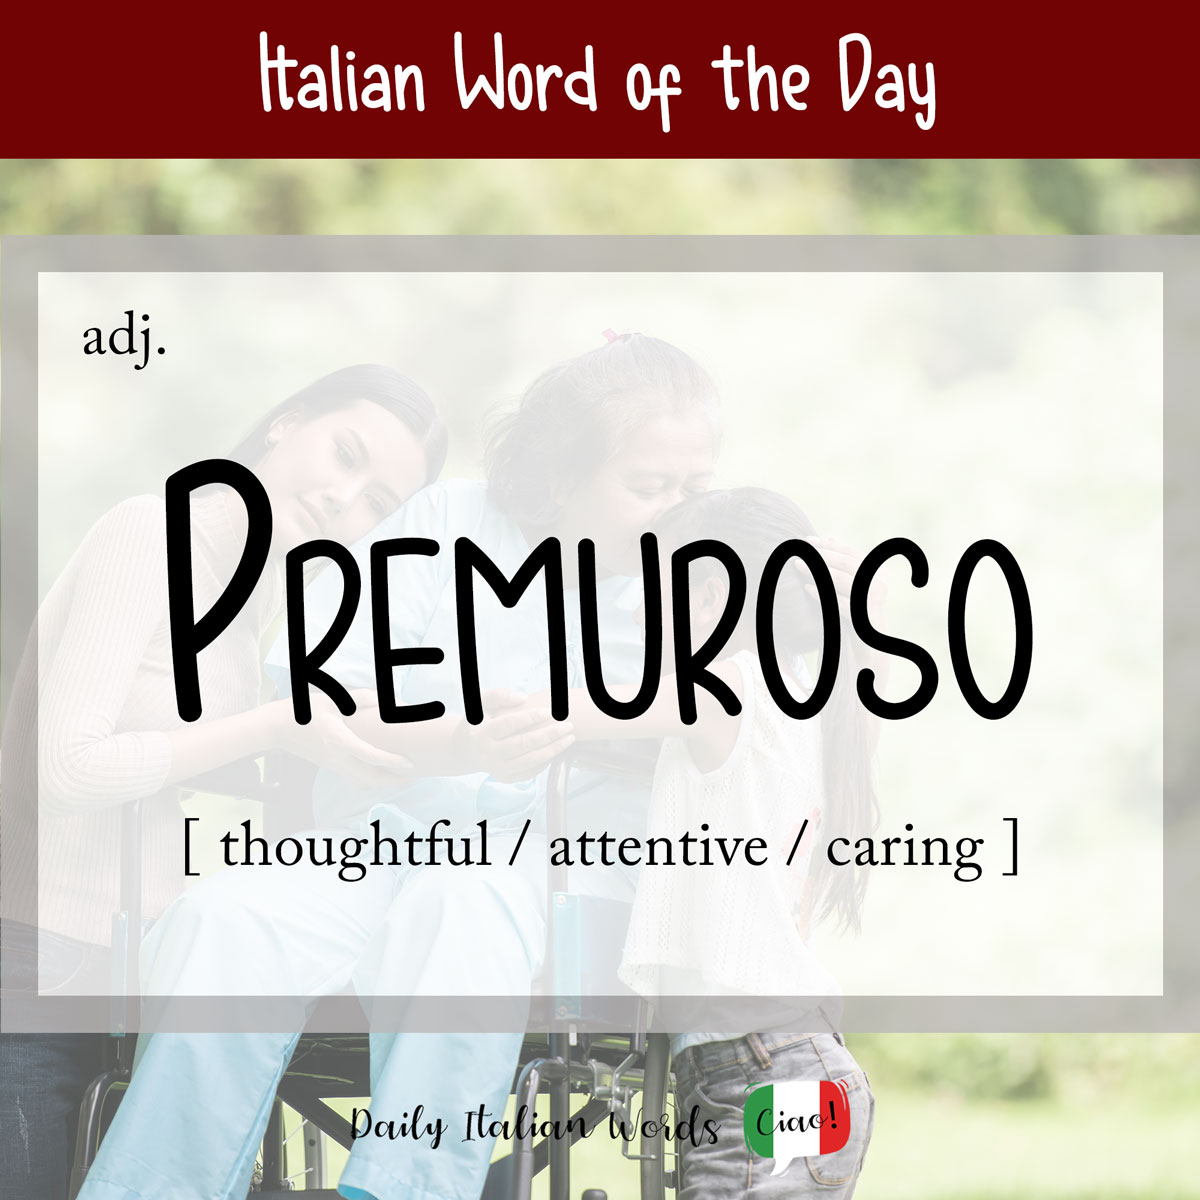 Italian word of the day: Premuroso (considerate/caring/careful)